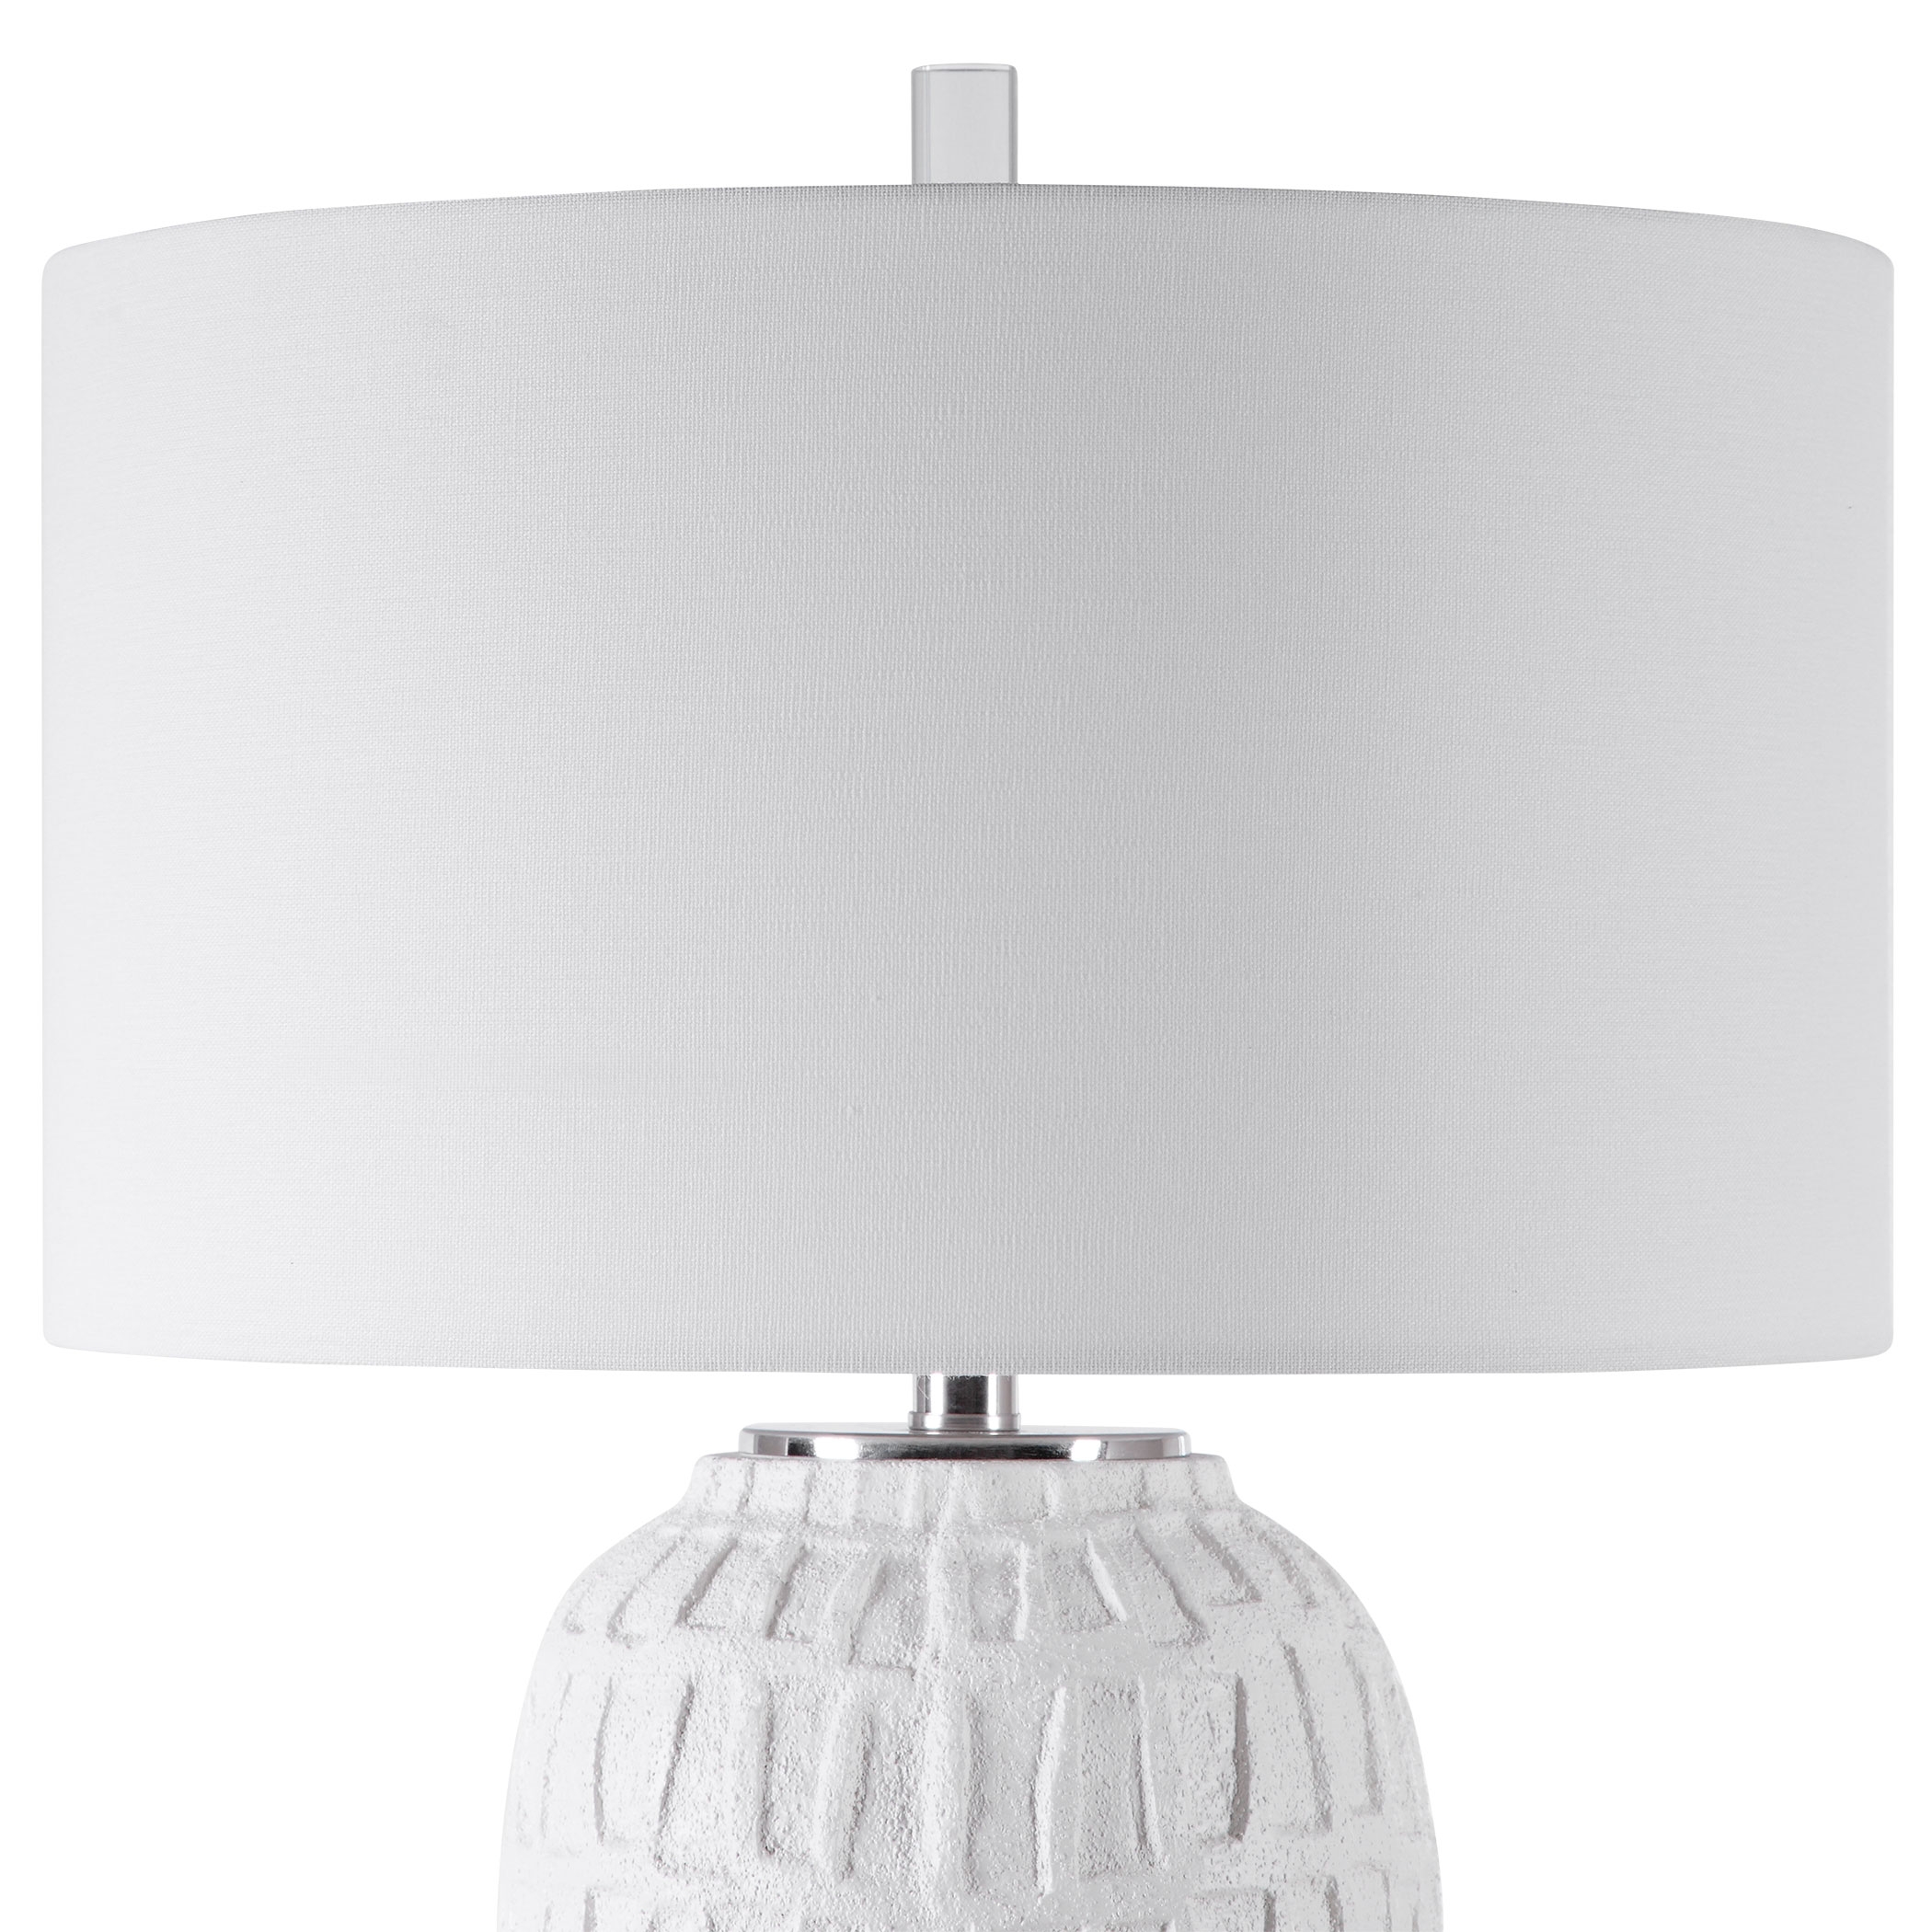 Caelina Textured White Table Lamp - Image 3